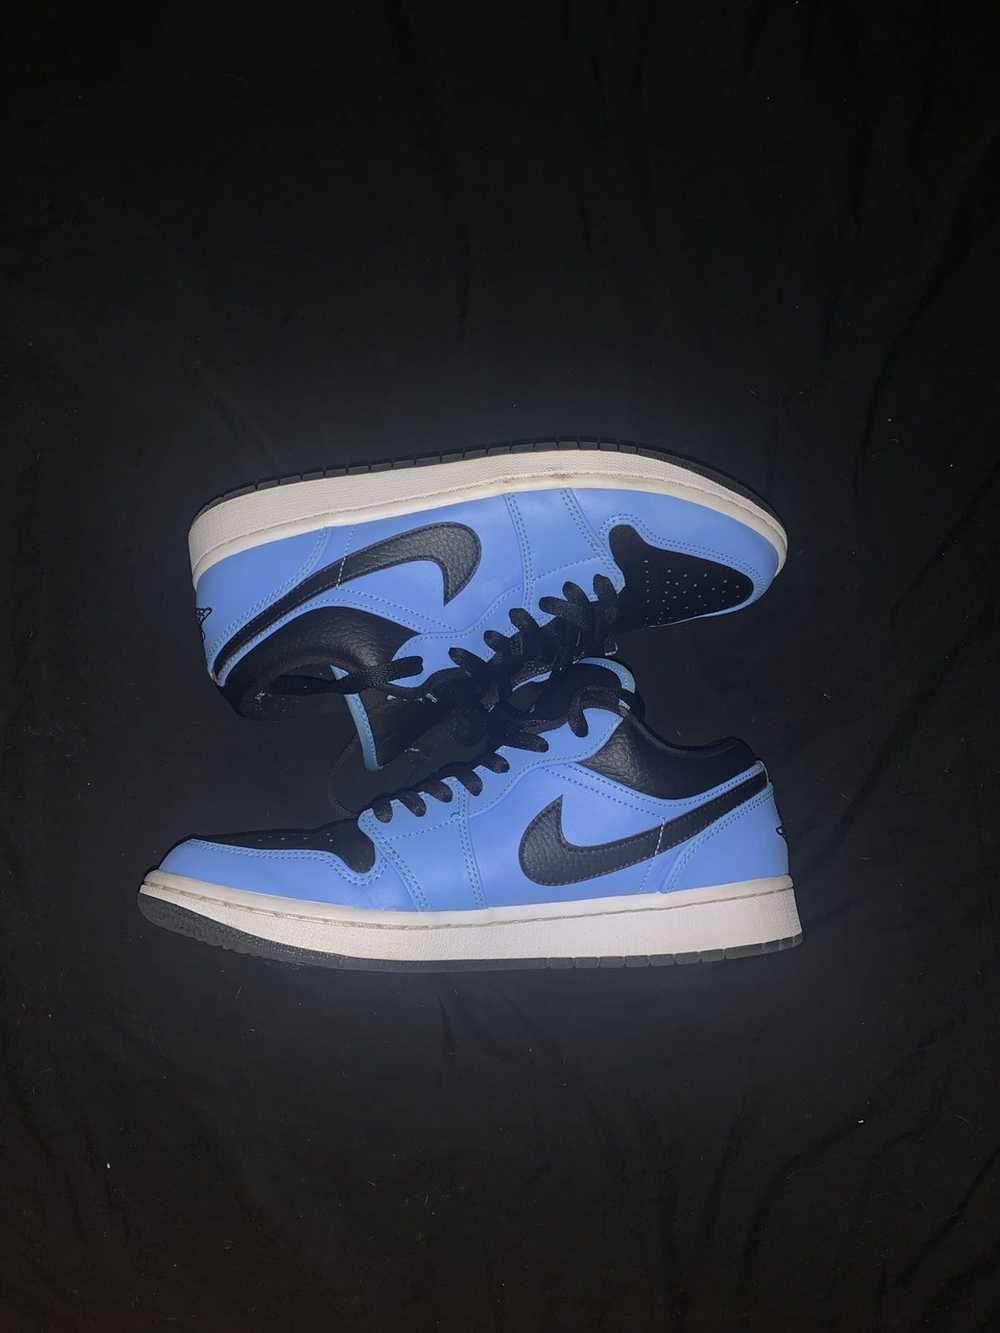 Jordan Brand × Nike Jordan 1 low unc blue black - image 4